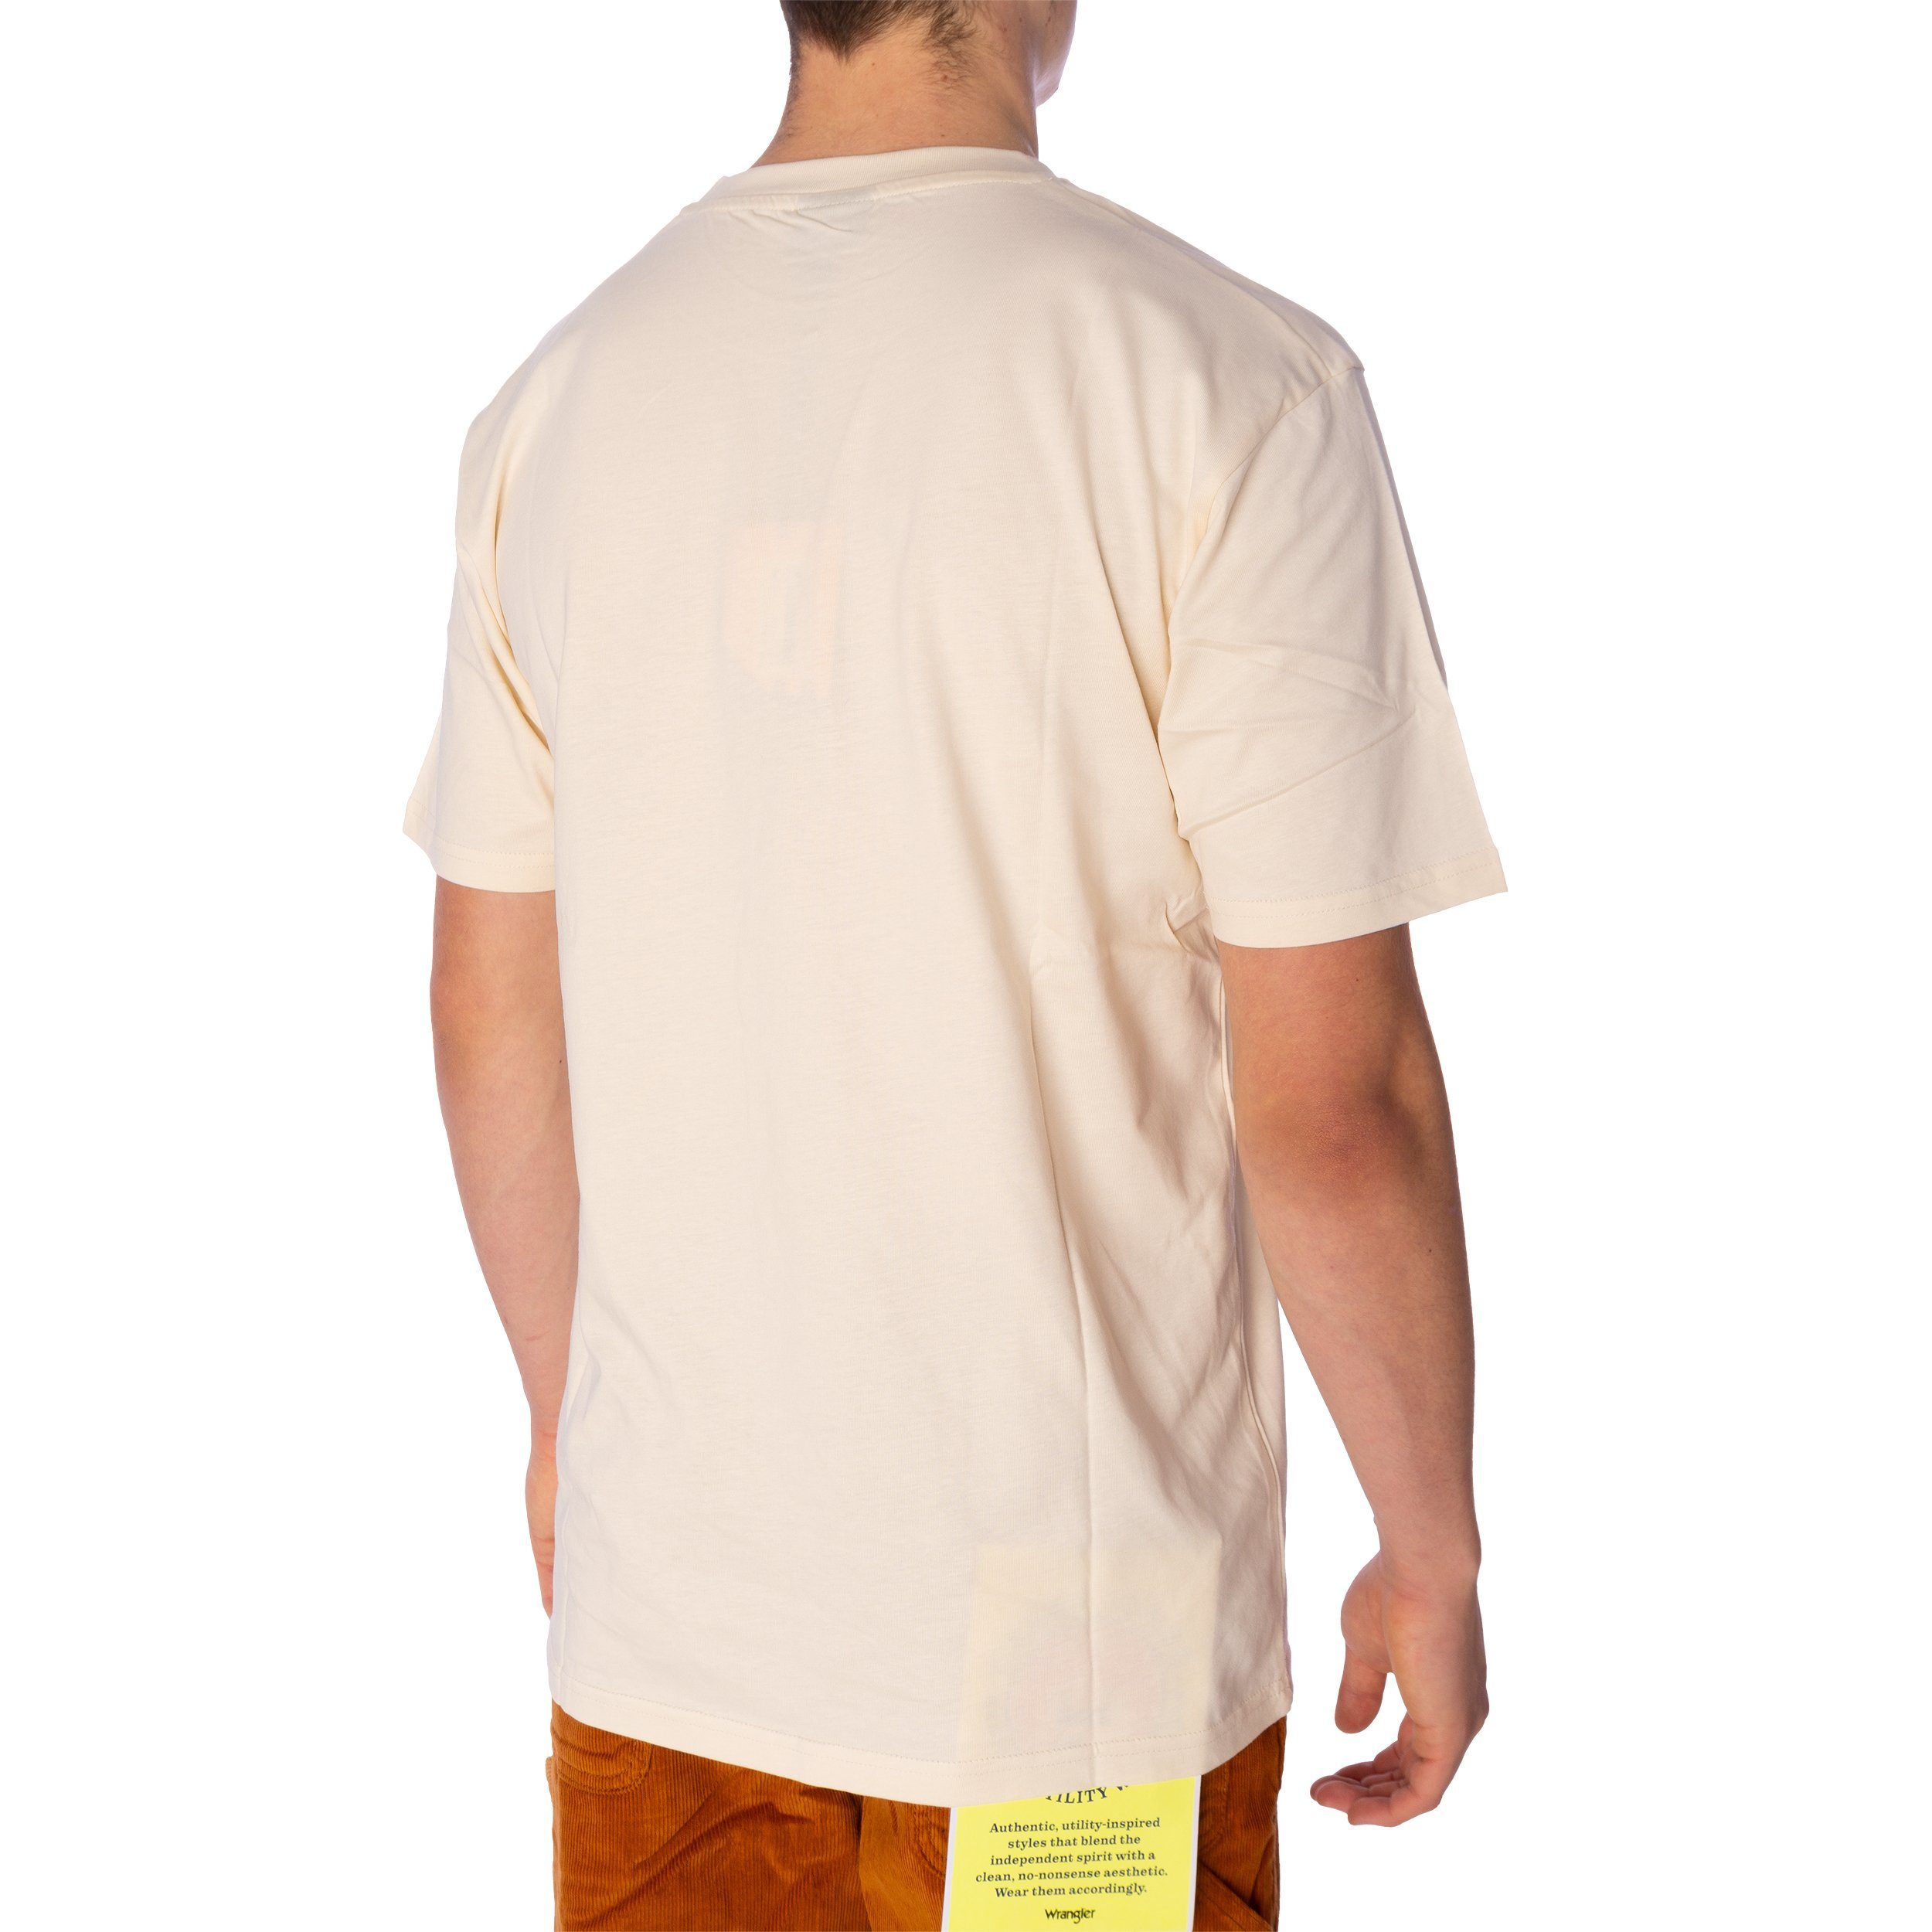 (1-tlg) T-Shirt offwhite/burgundy Ellesse T-Shirt Ellesse Aprel